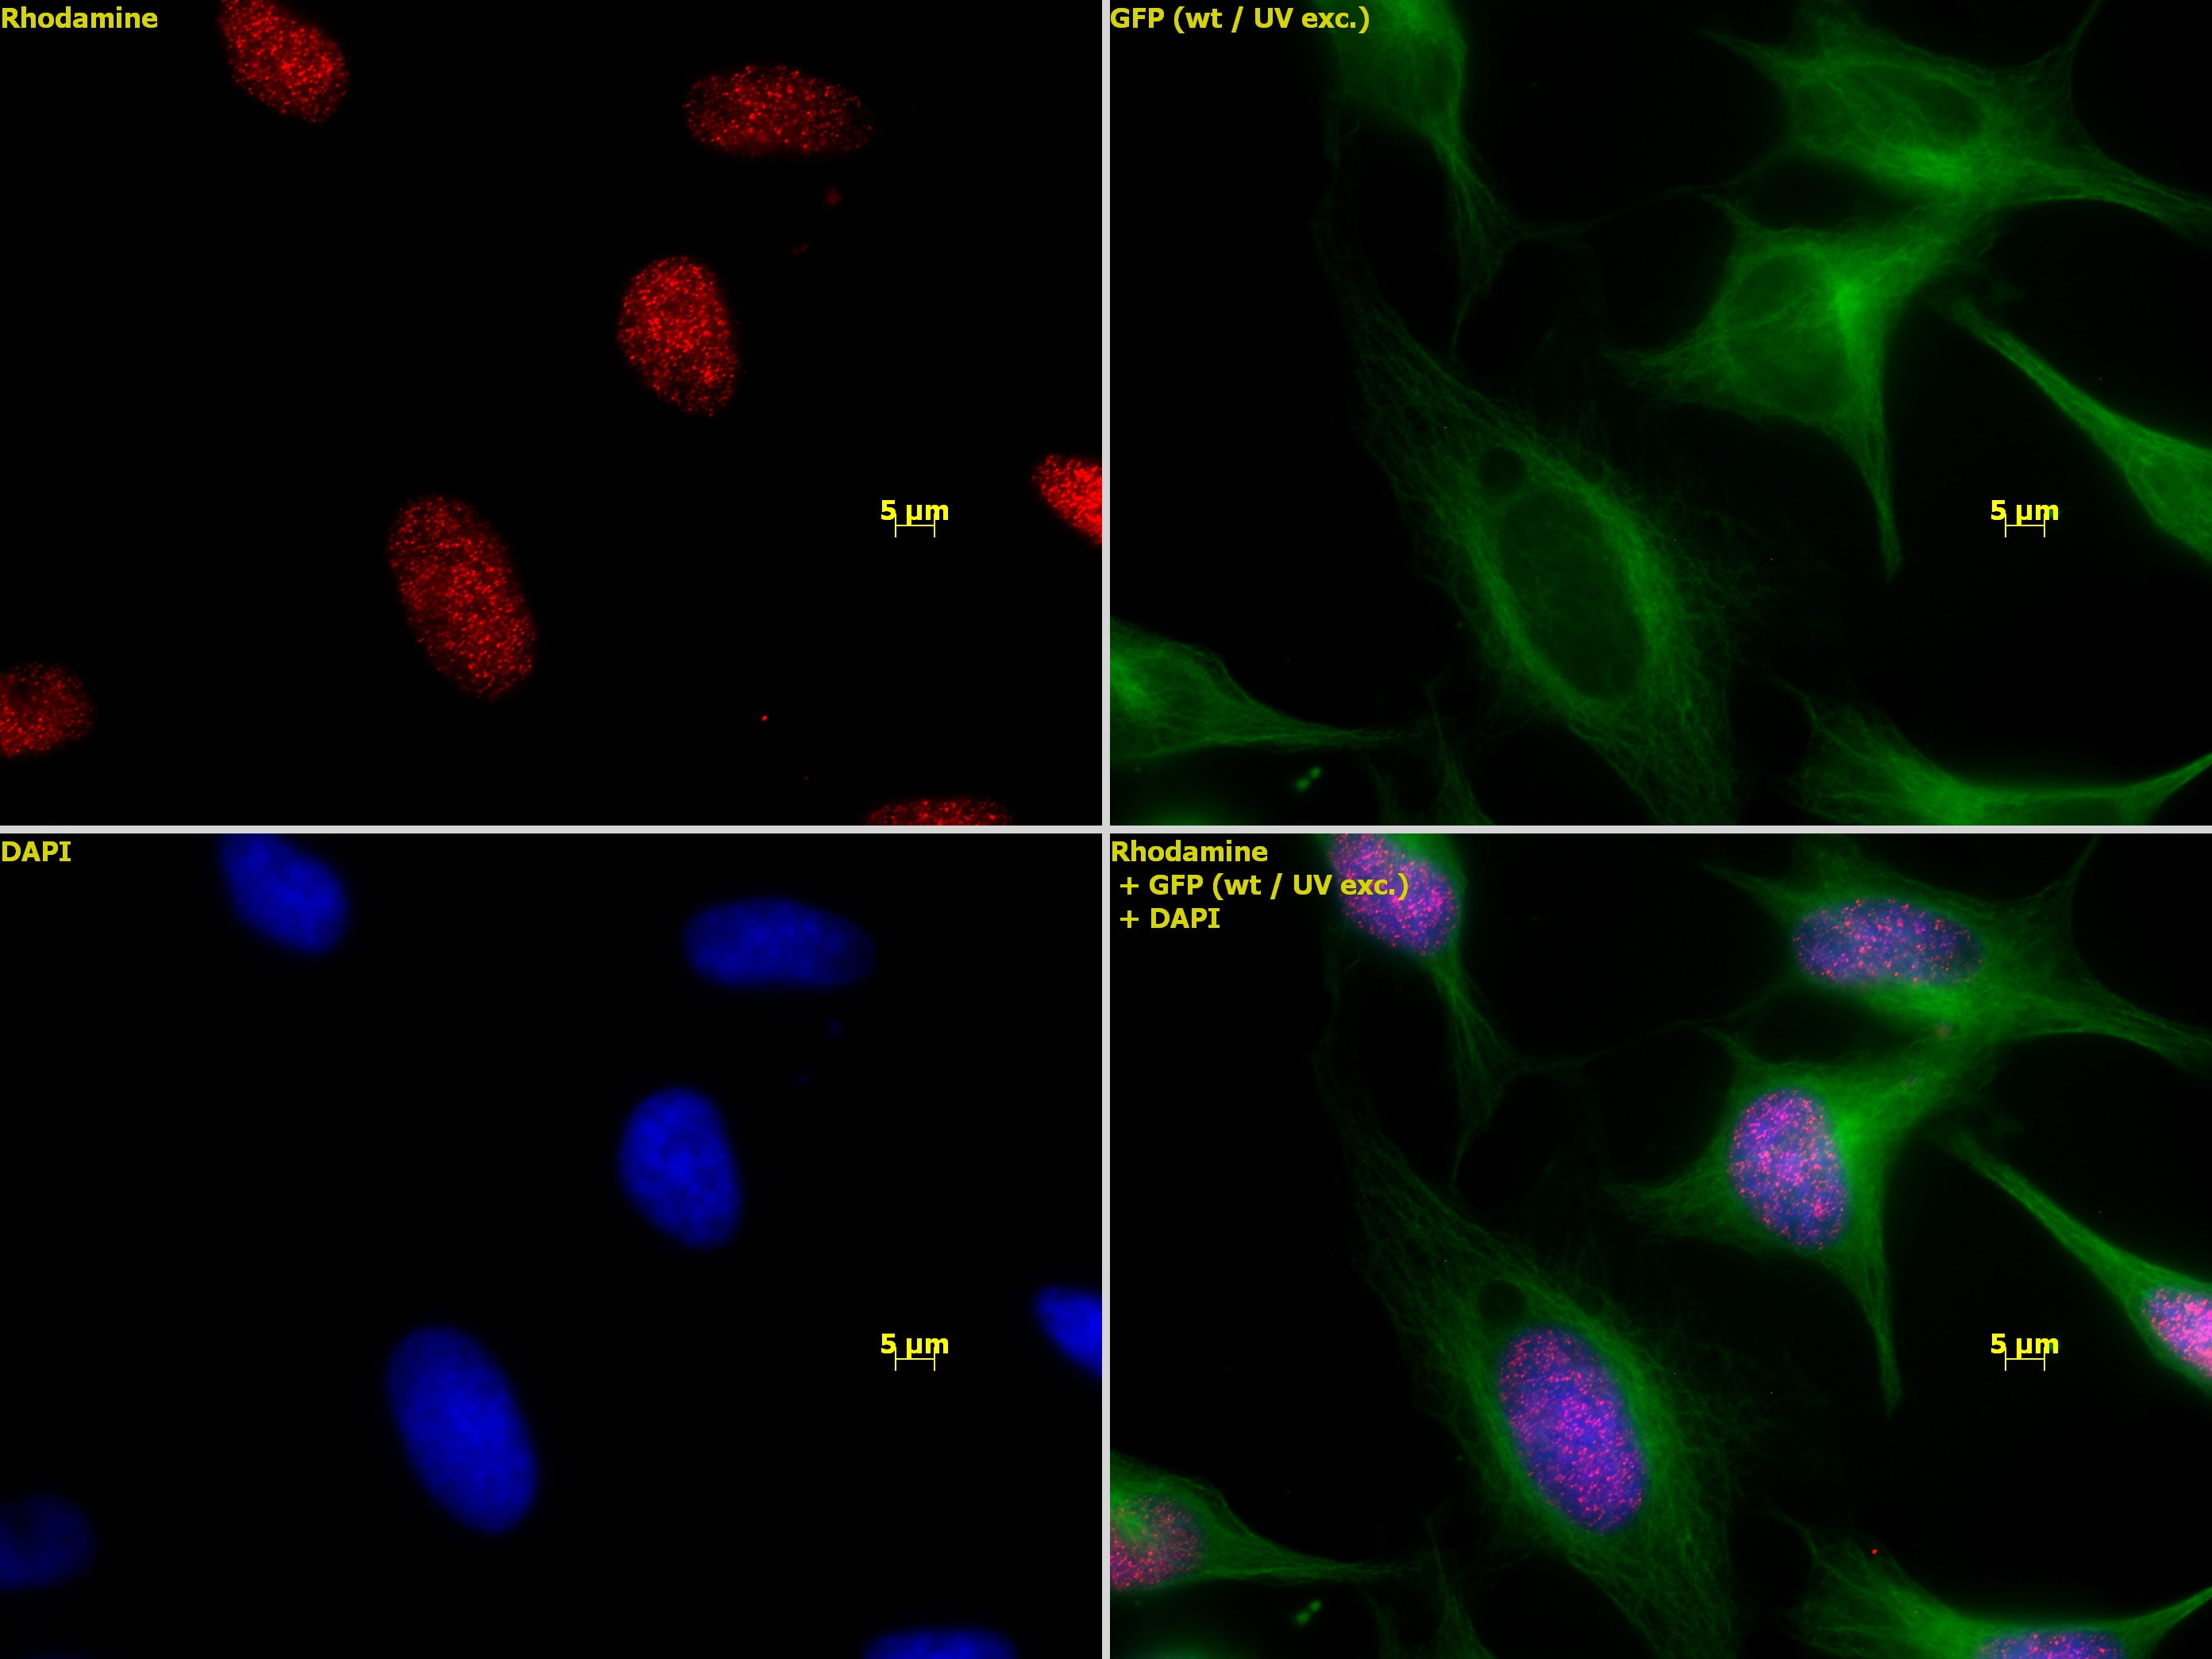 Histone H3K27me1 antibody (pAb) - MyBio Ireland - Active Motif